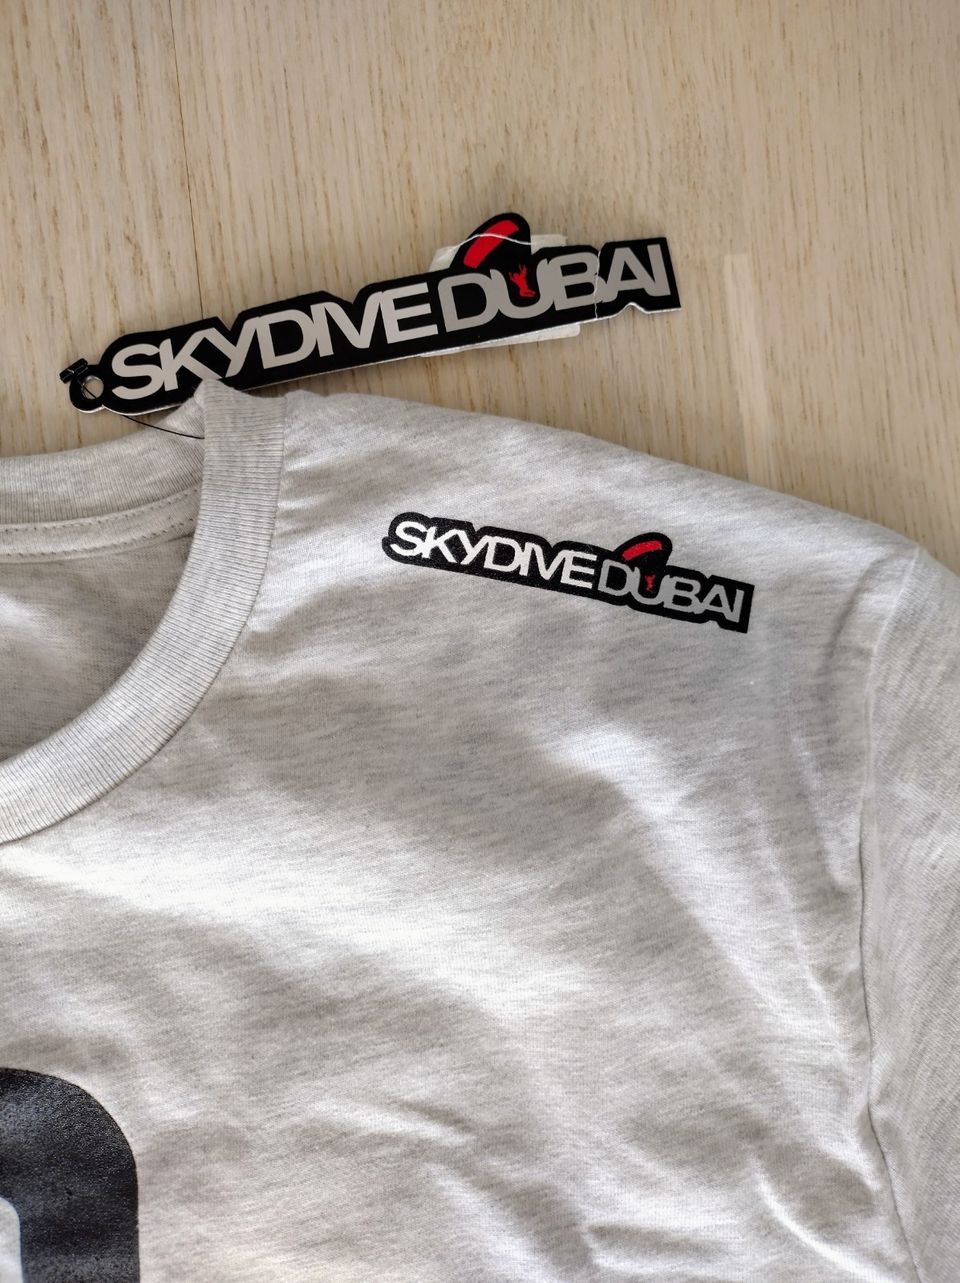 UUSI Sky Dive Dubai t-paita tee shirt new